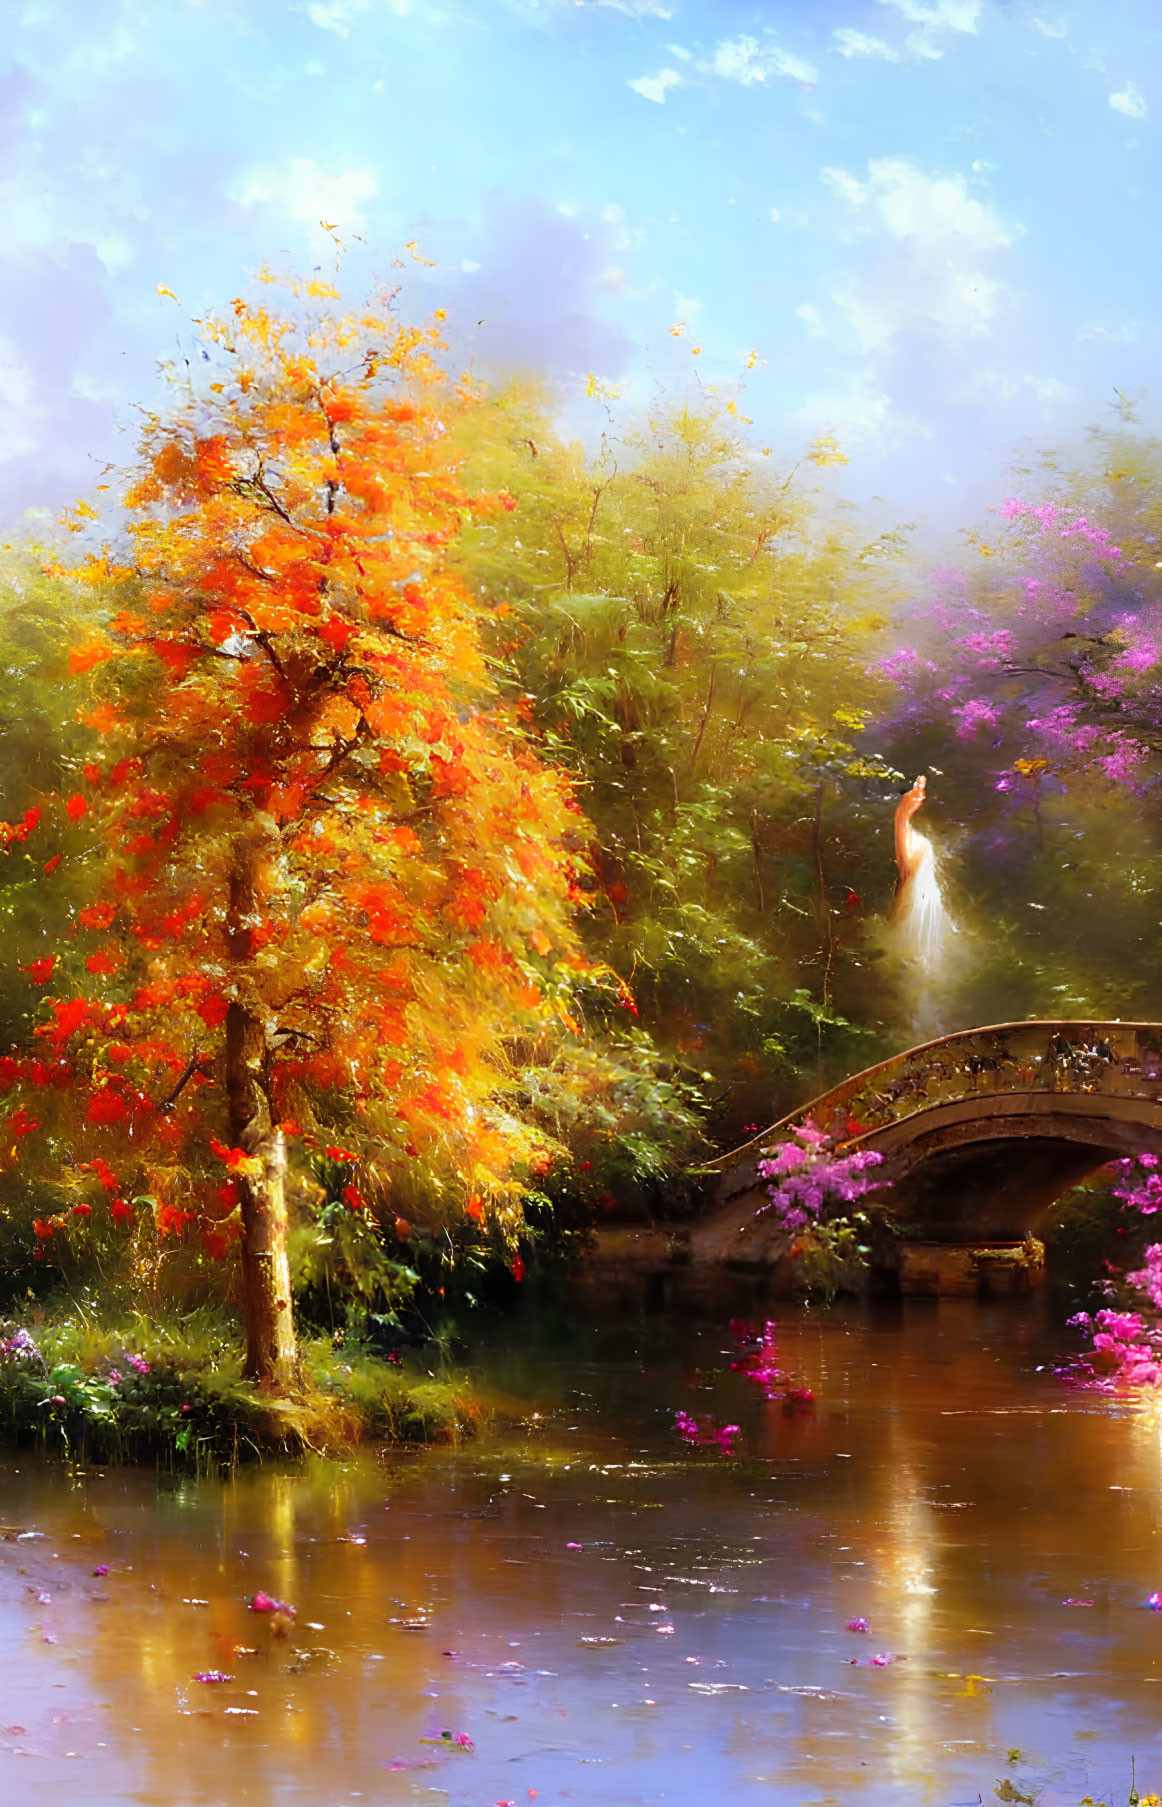 Colorful autumn landscape with bridge, river, and figure in white amidst lush foliage.